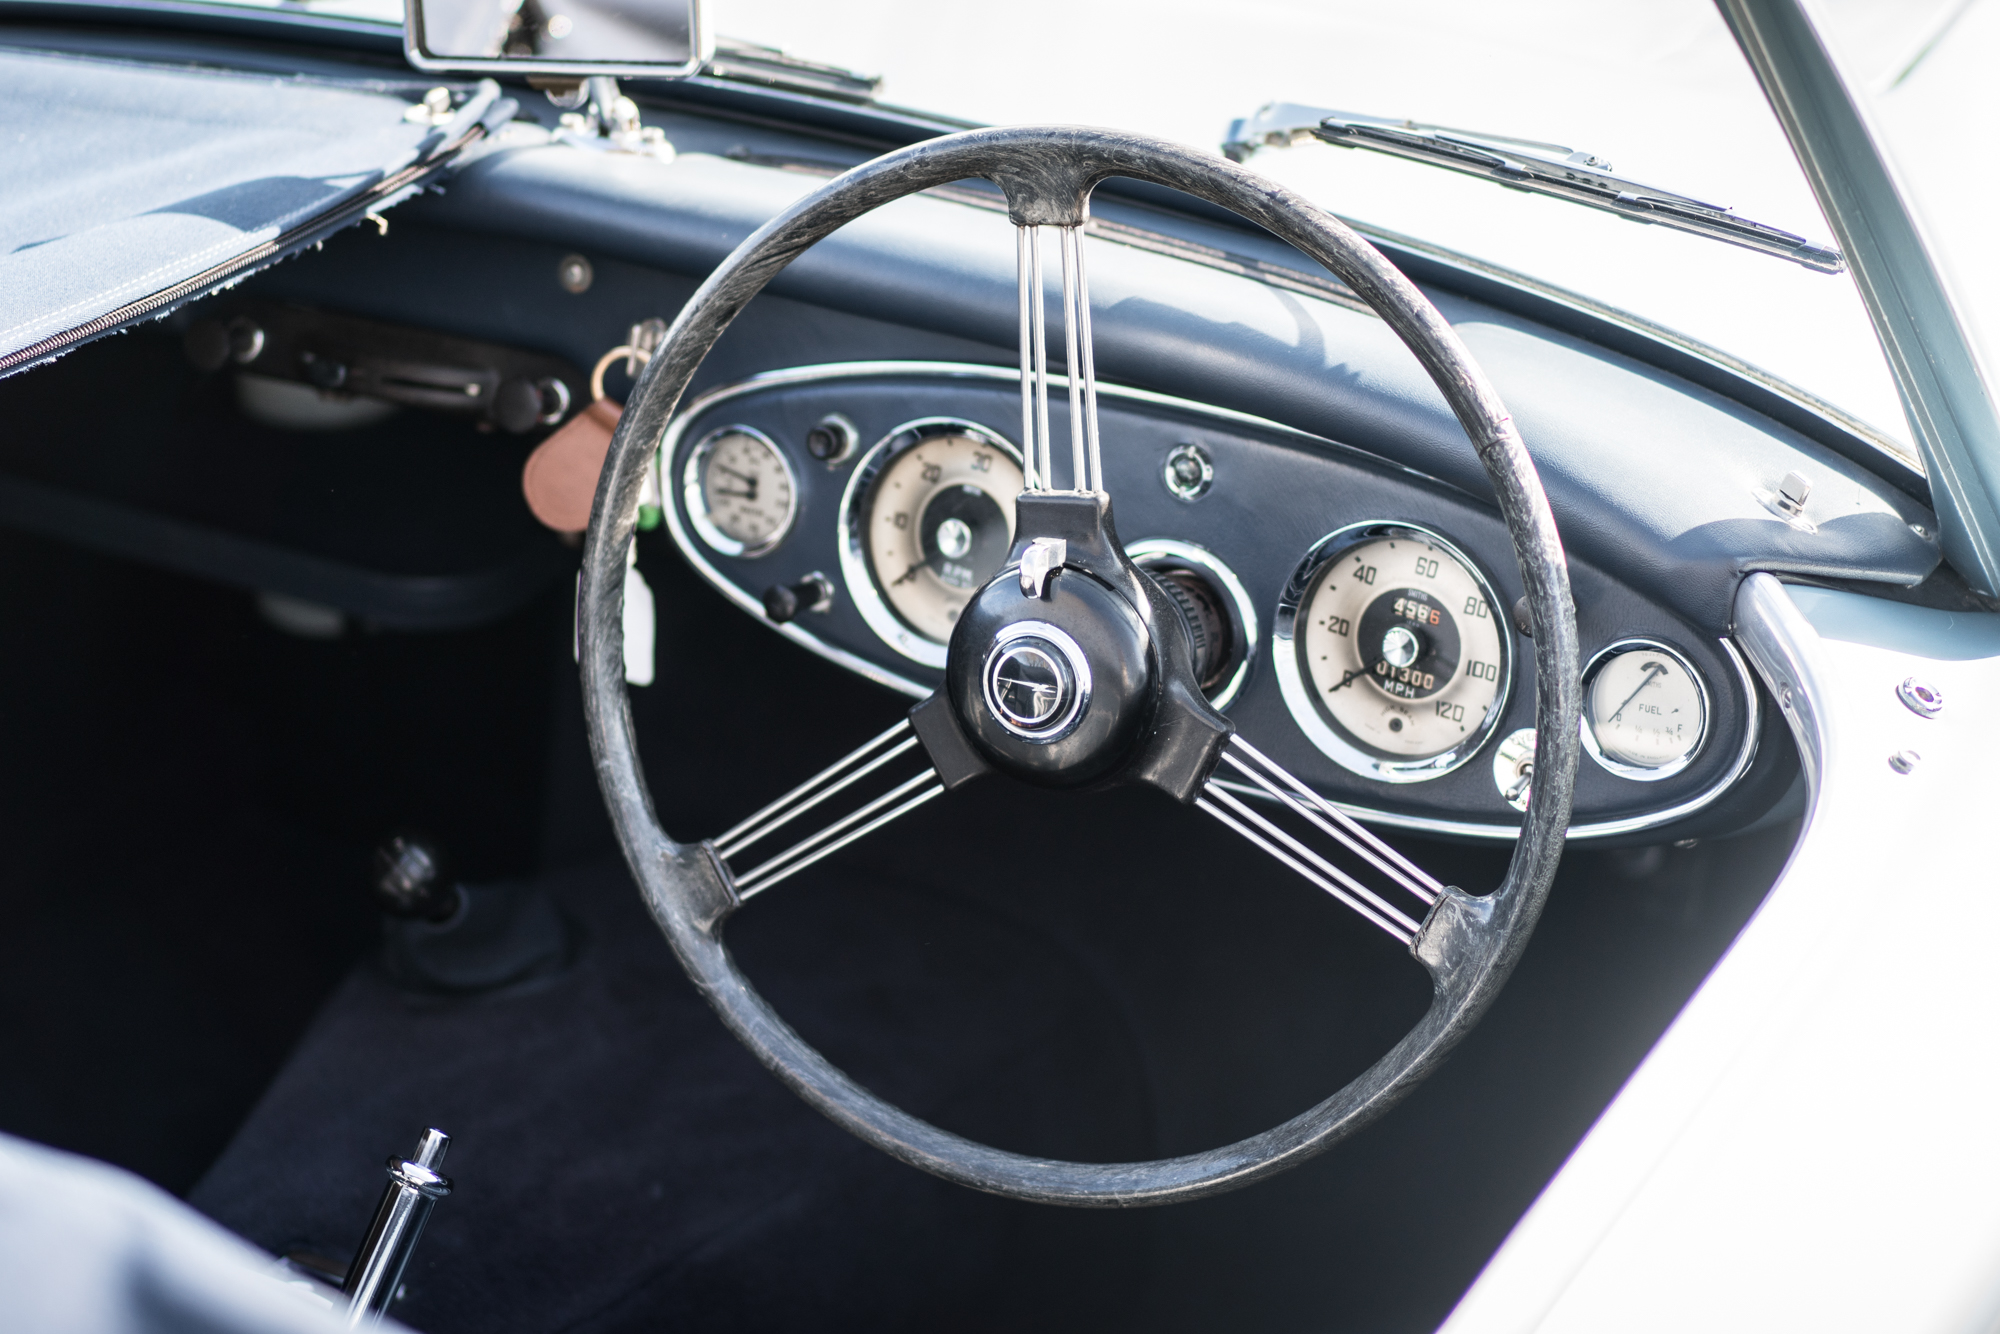 1958 Austin Healey 100 Six 2 Seat Roadster 40 MIL Refrigerator Magnet 